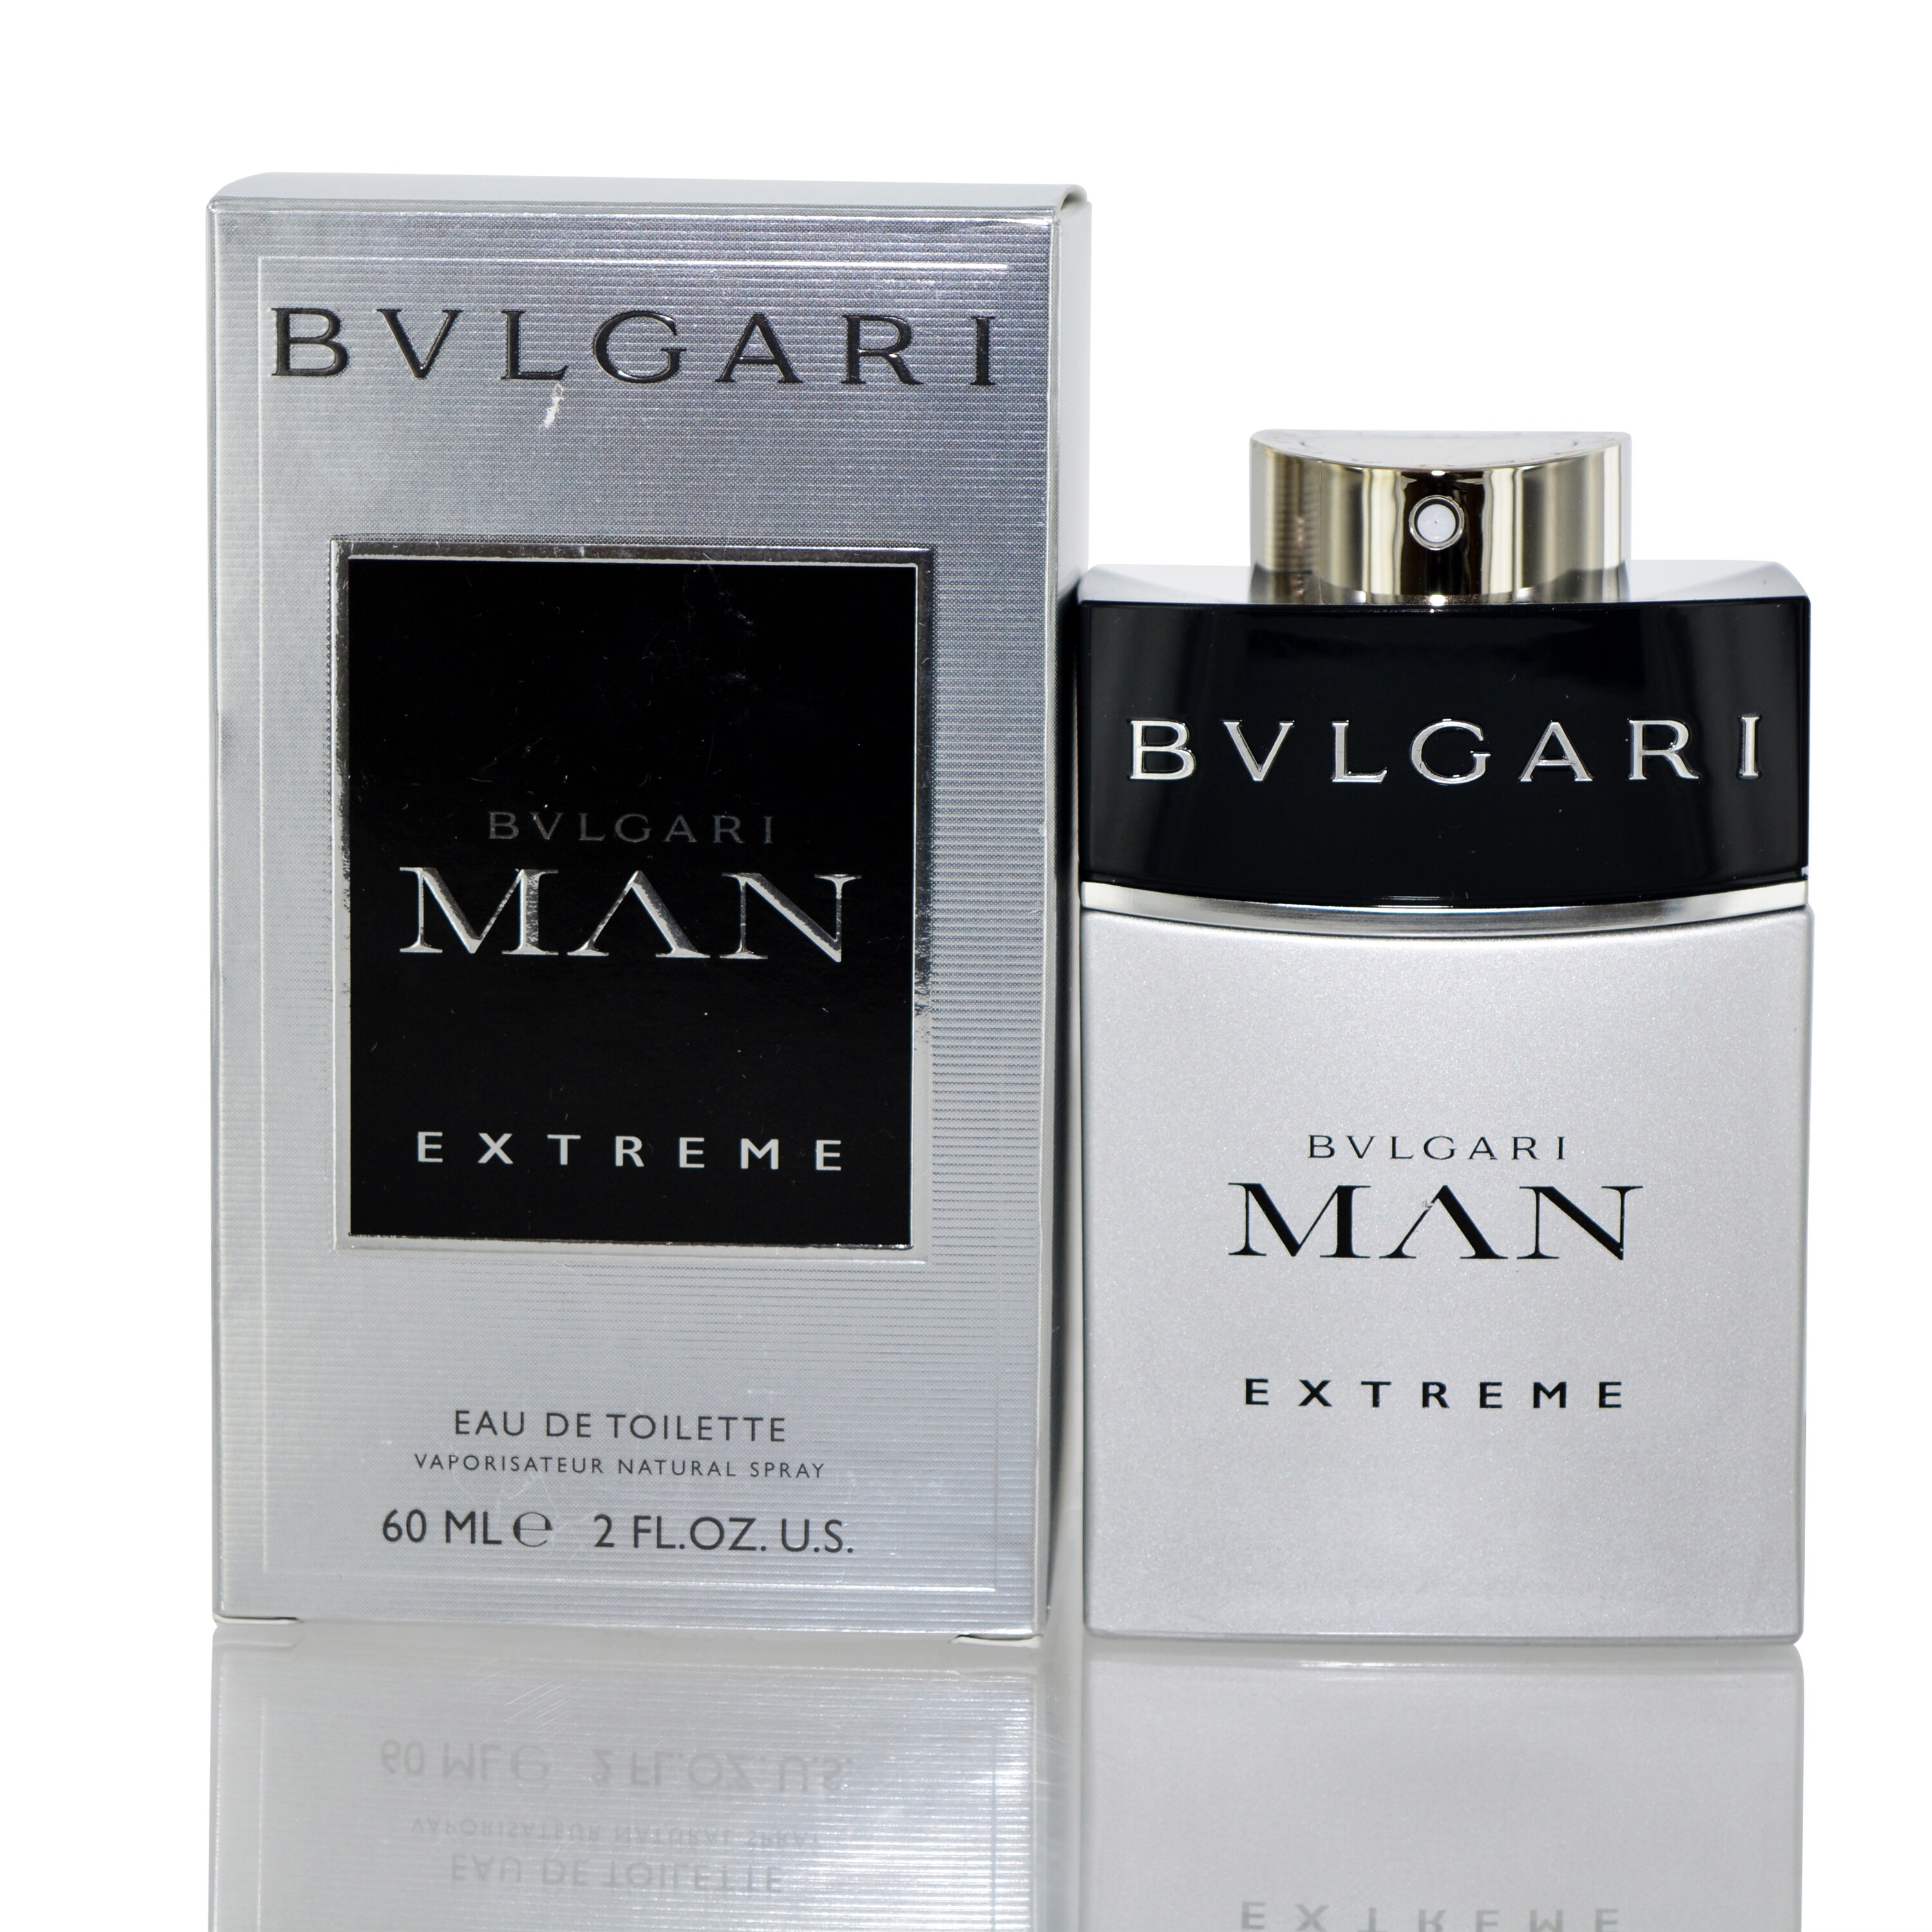 Bvlgari Man Extreme Men S 2 Ounce Eau De Toilette Spray On Sale Overstock